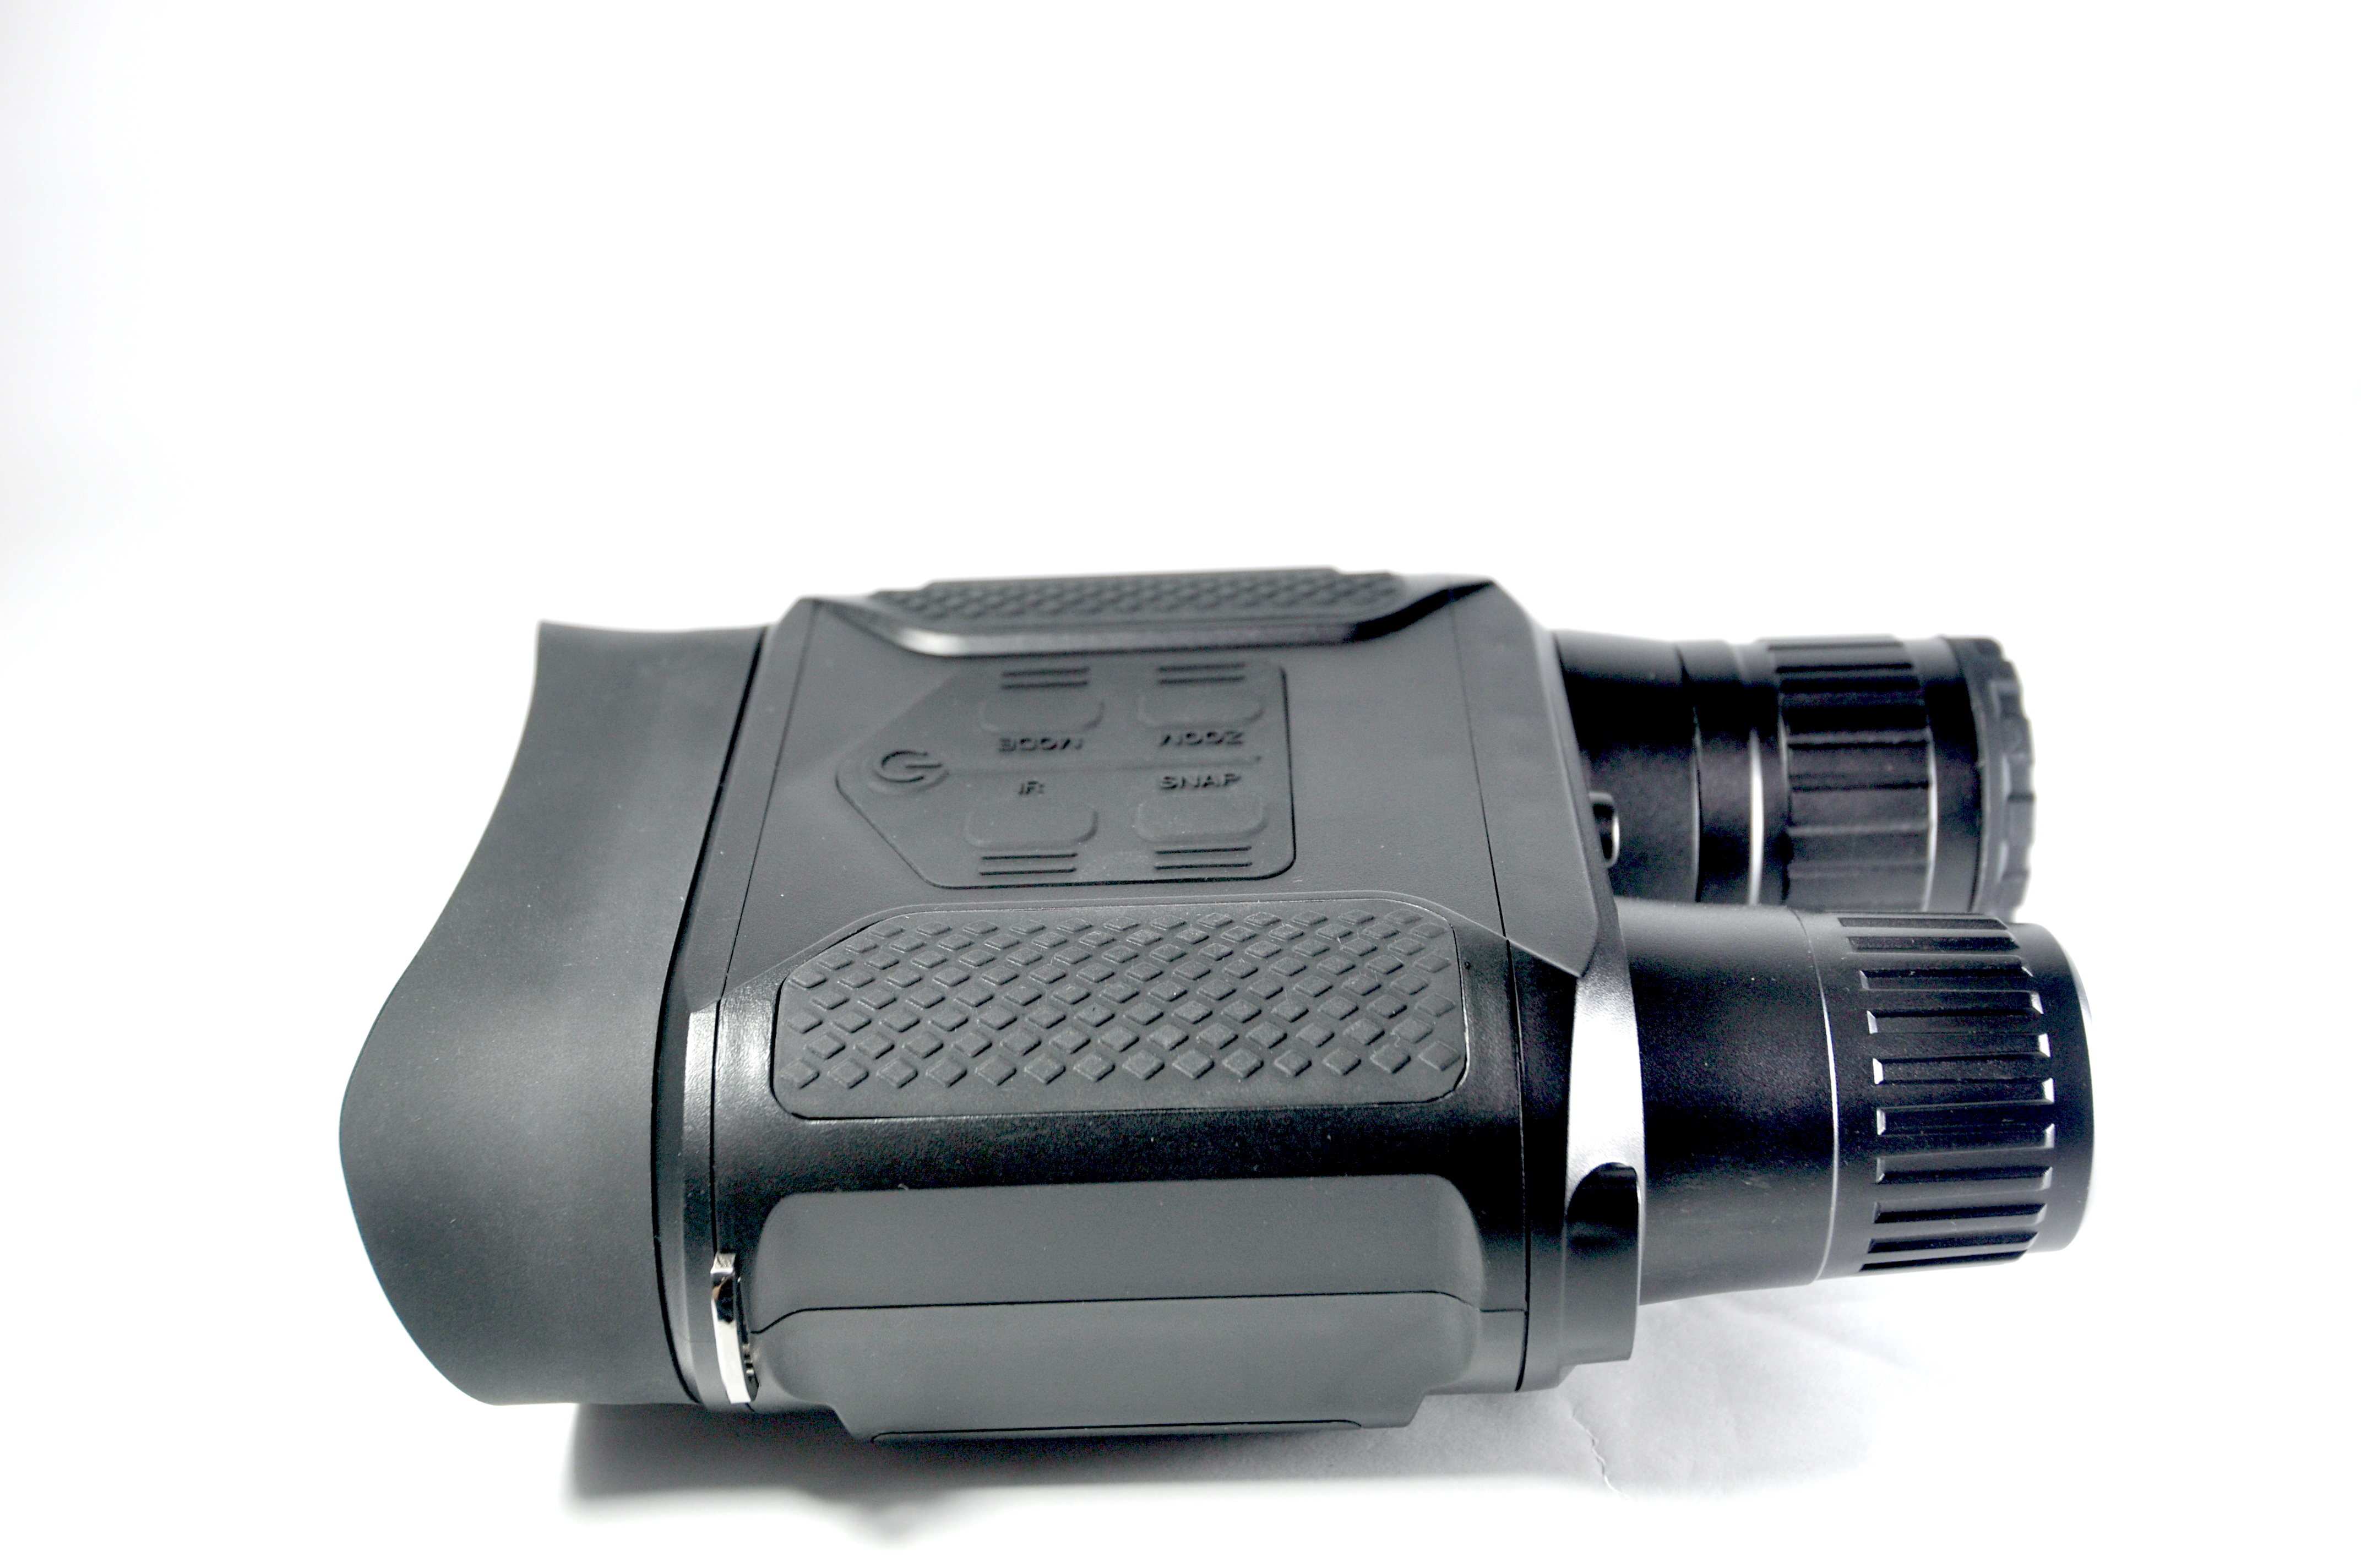 Eyebre-NV-800-7x31-Digital-Night-Vision-Telescope-Binocular-400m-Wide-Dynamic-Range-Takes-720p-Video-1194347